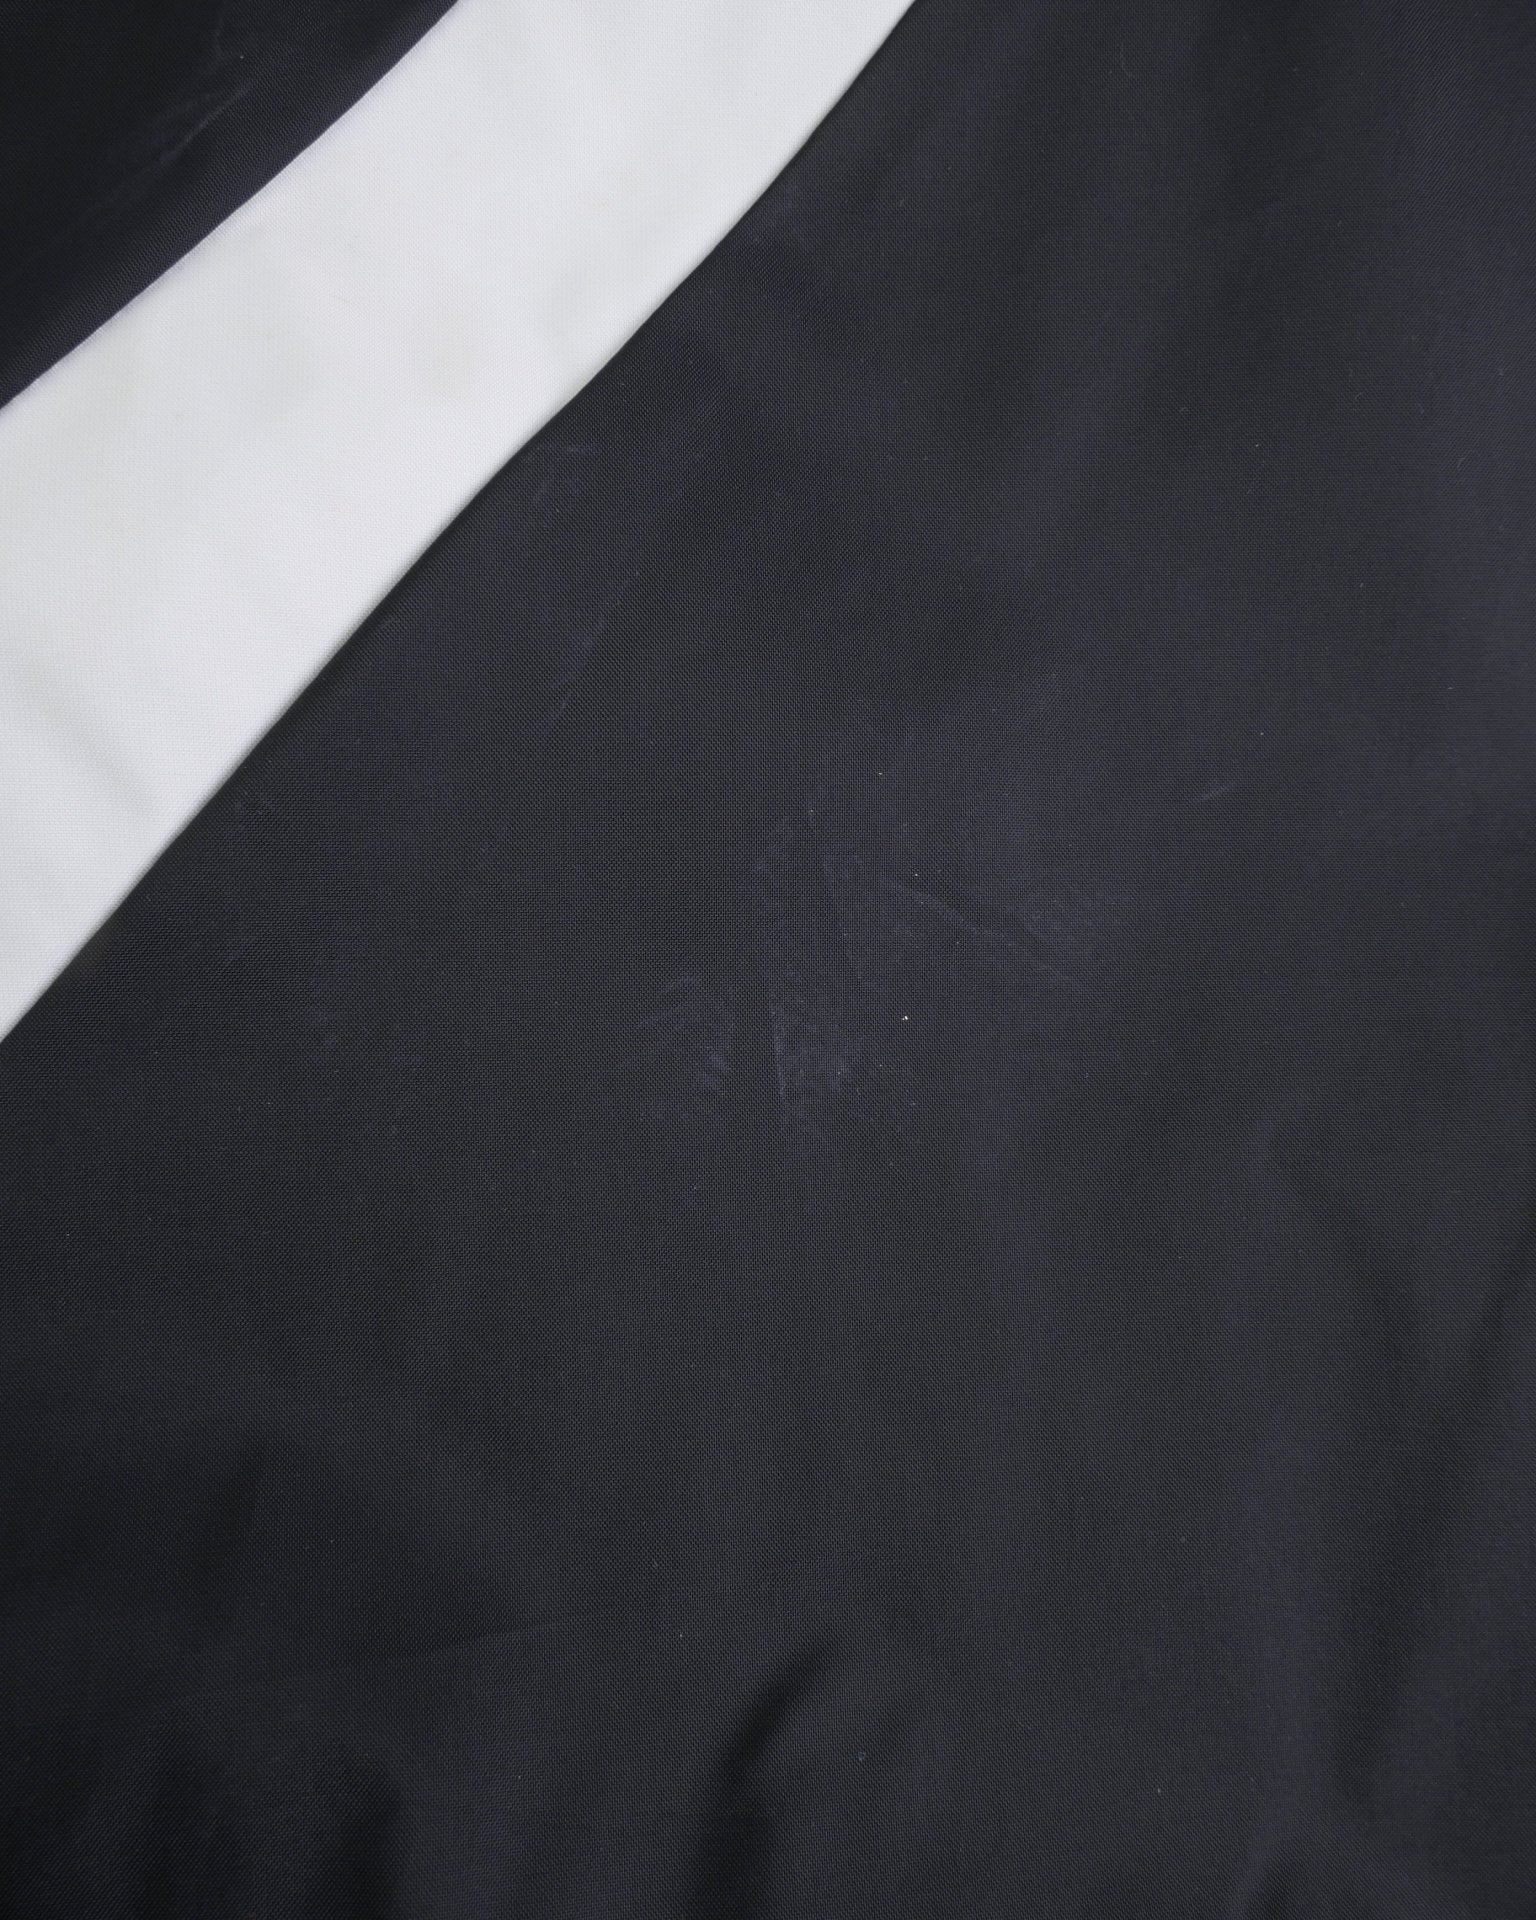 Adidas printed Logo 'Plymouth Argyle FC' Windbreaker - Peeces